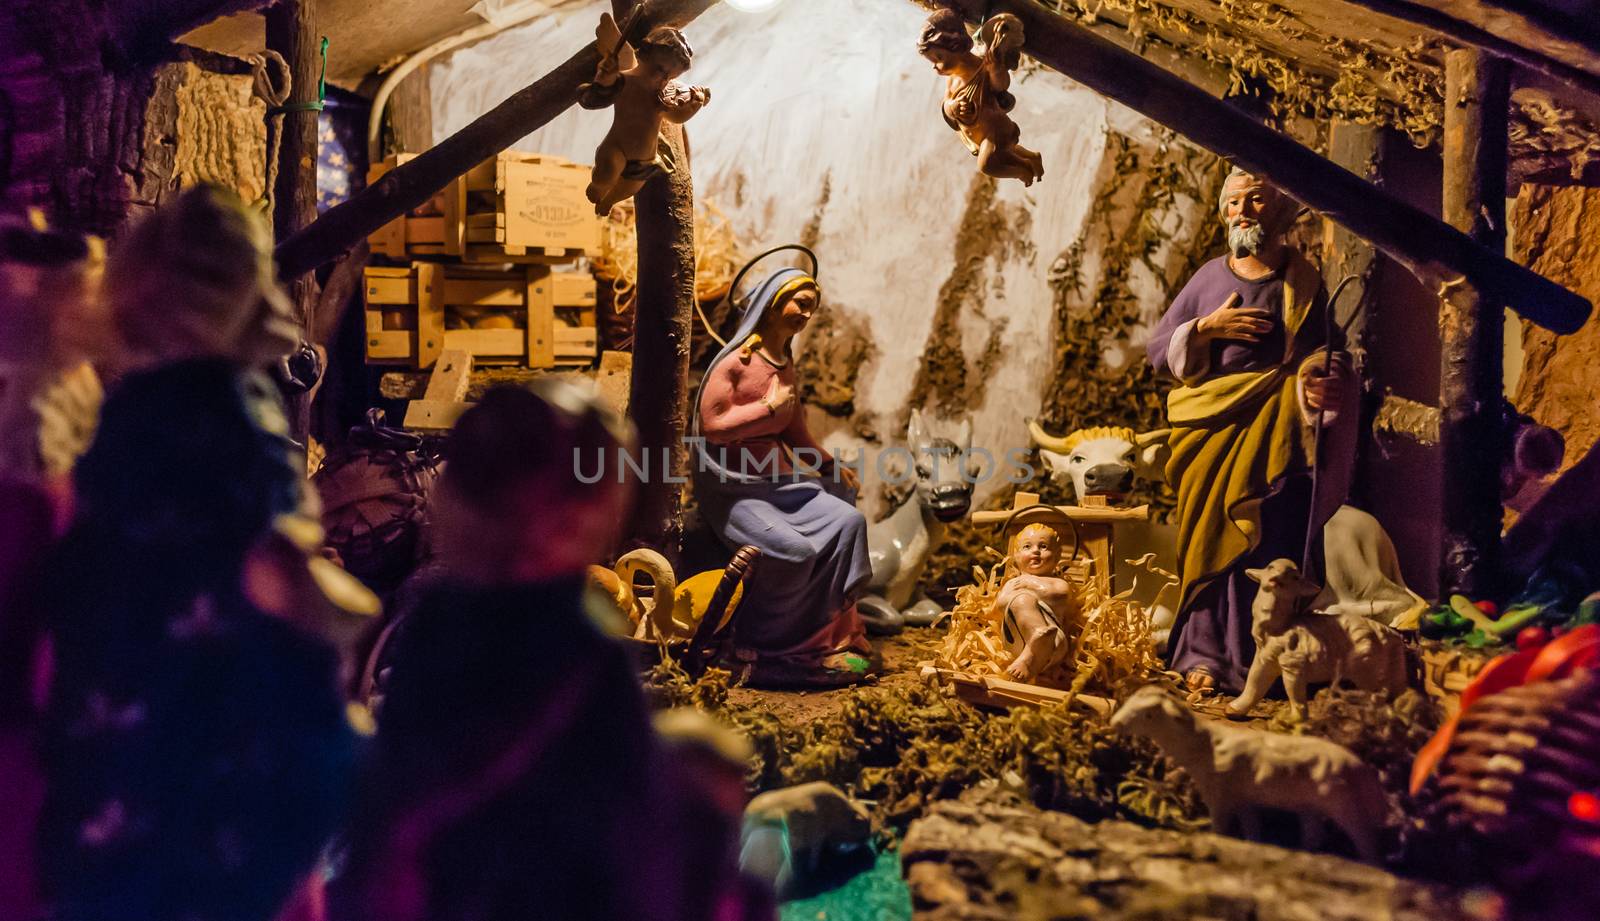 Birth of Jesus in the manger by rarrarorro